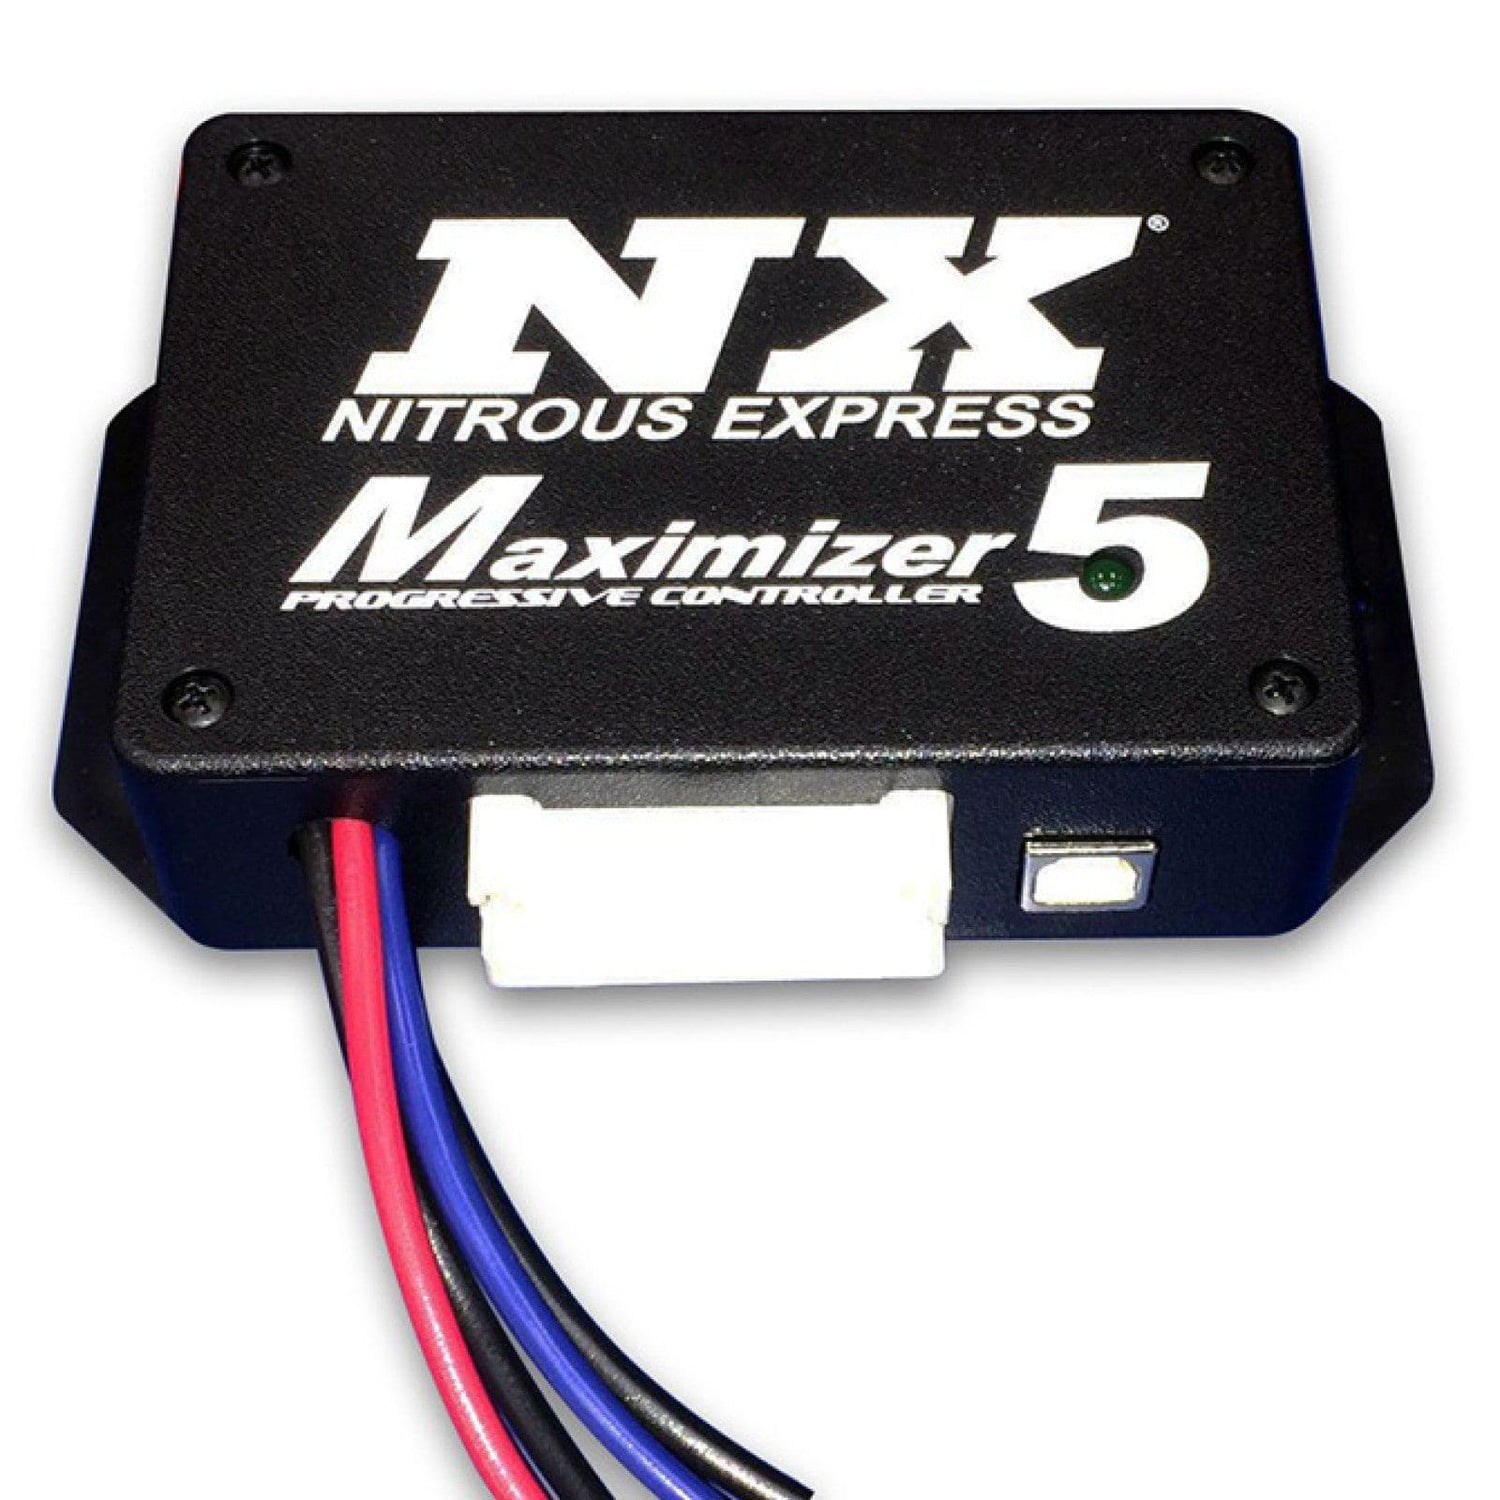 Nitrous Express Maximizer 5 Progressive Nitrous Controller - Rico's Garage